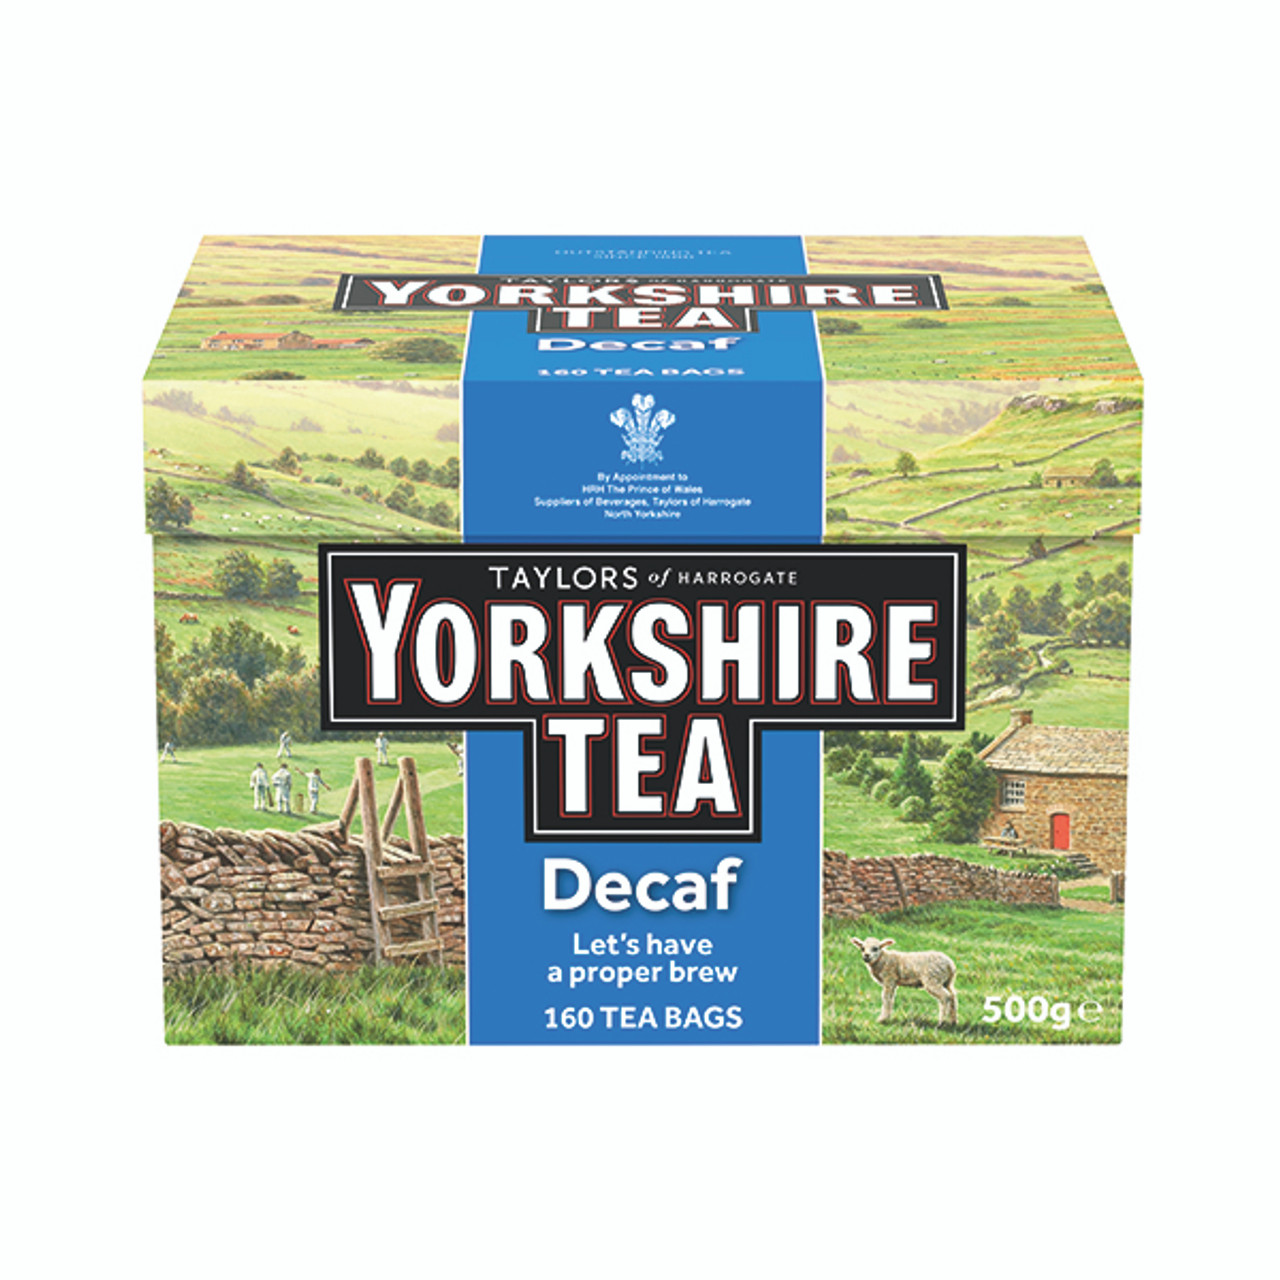 Yorkshire Tea Bags Pack of 1040